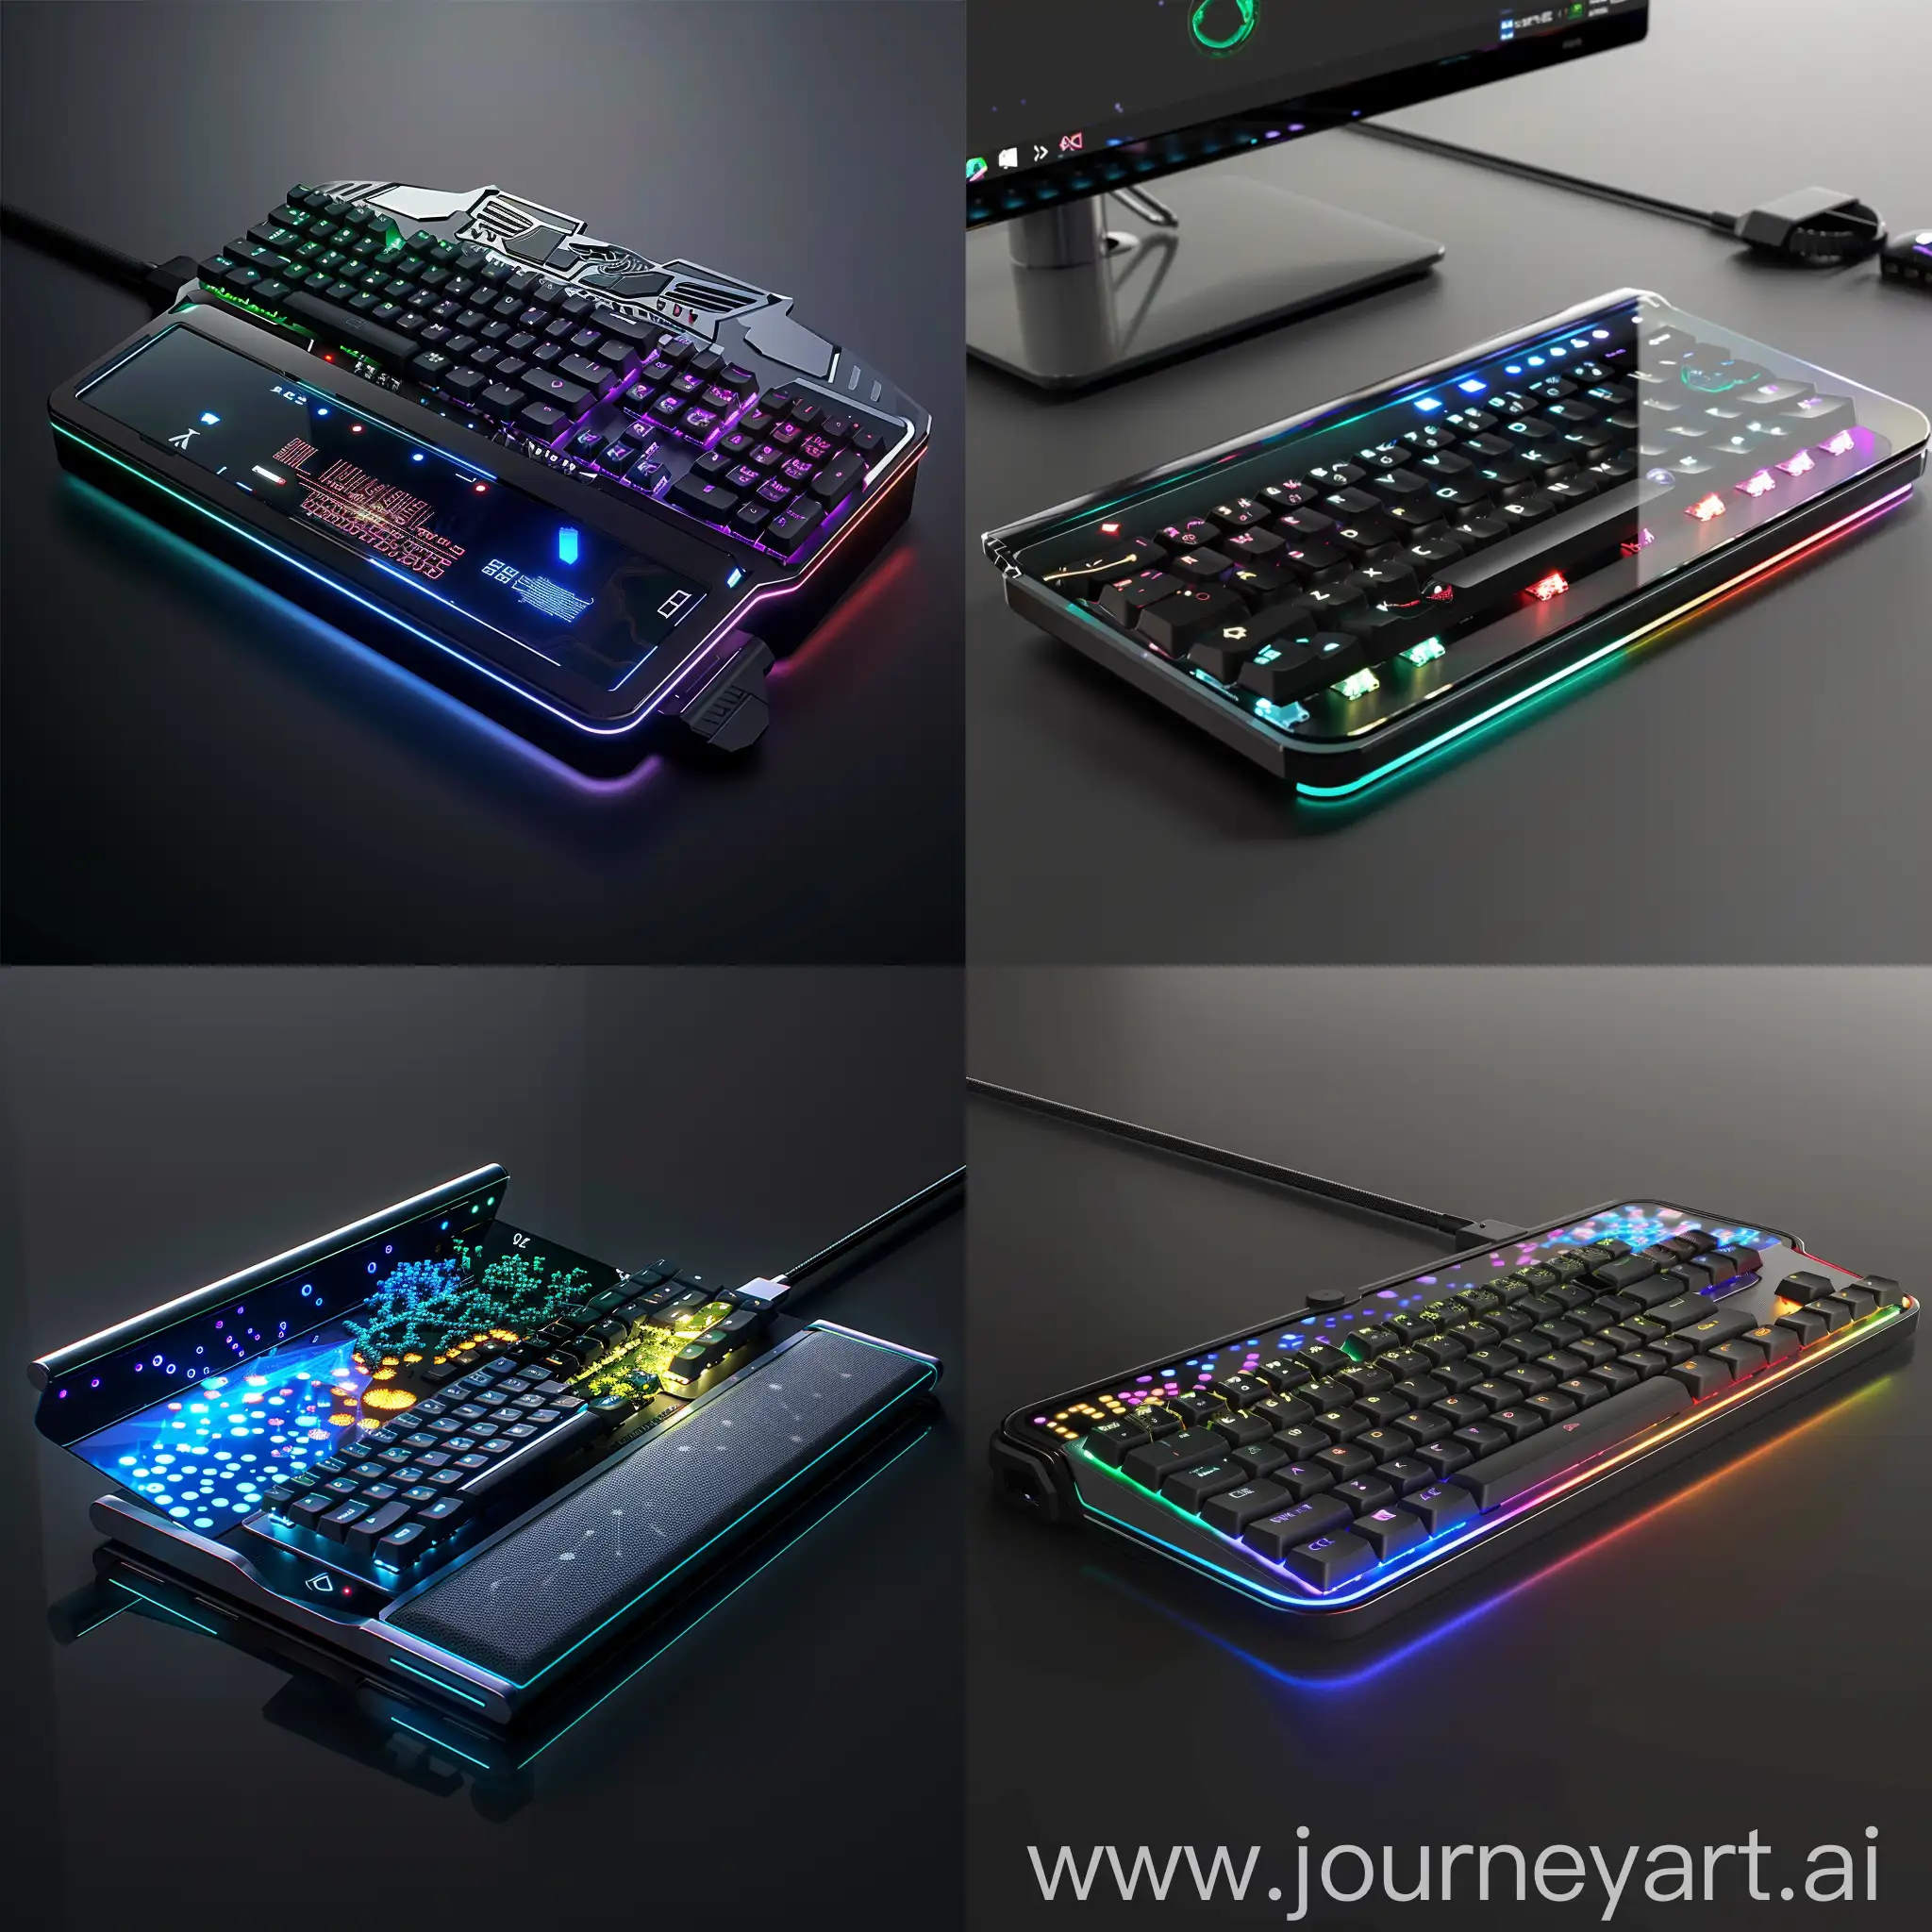 Futuristic-PC-Keyboard-with-Holographic-Display-and-Biometric-Sensors